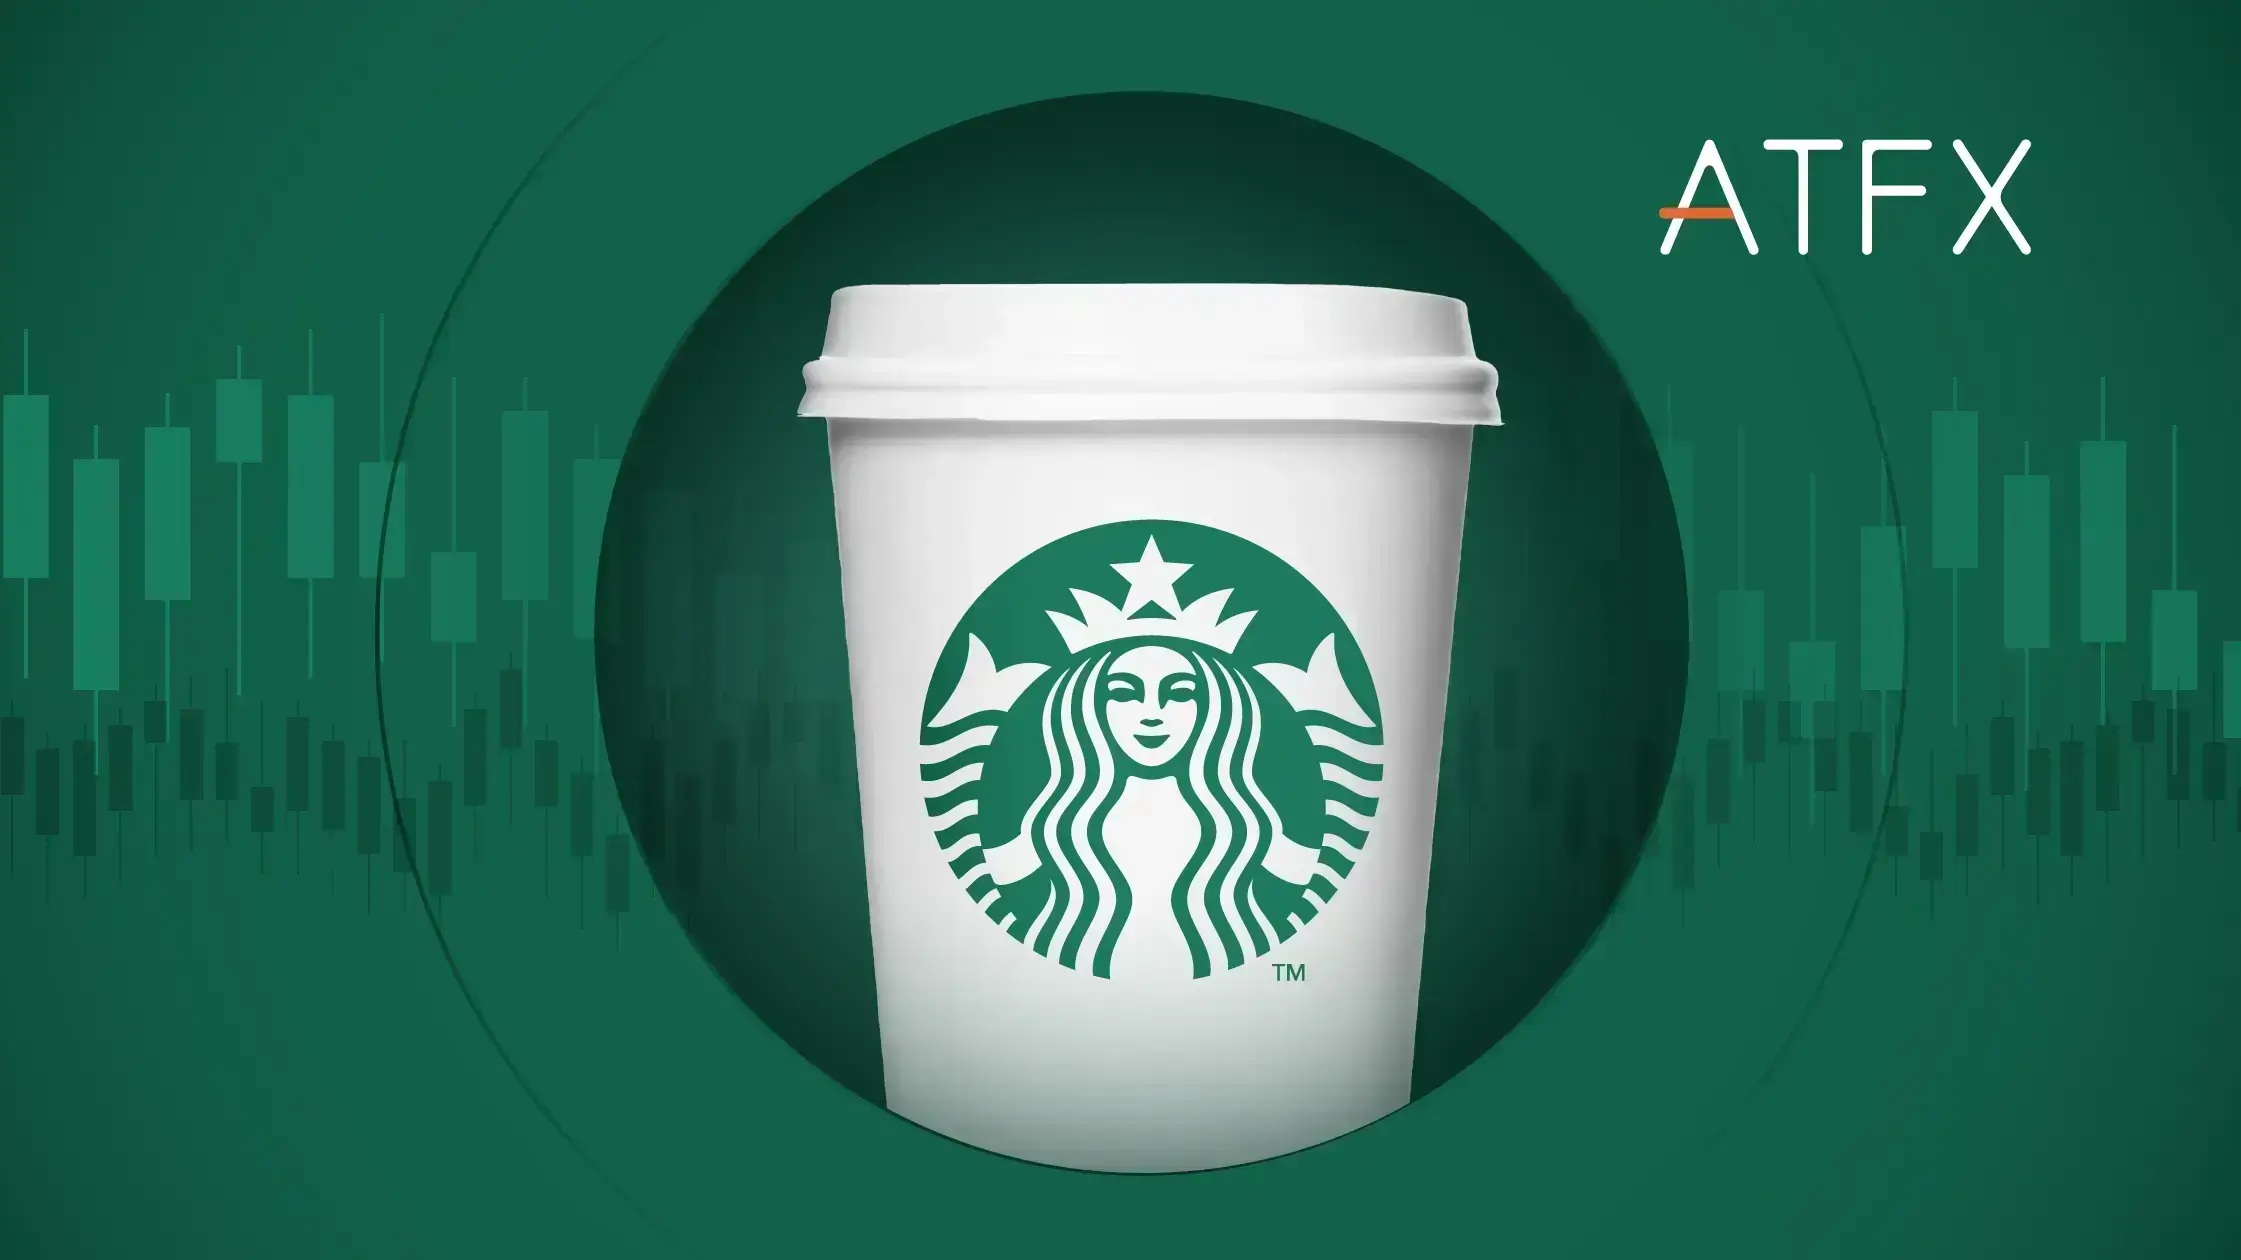 Starbucks-Shares-Trade-in-Tight-Range-Ahead-of-Earnings